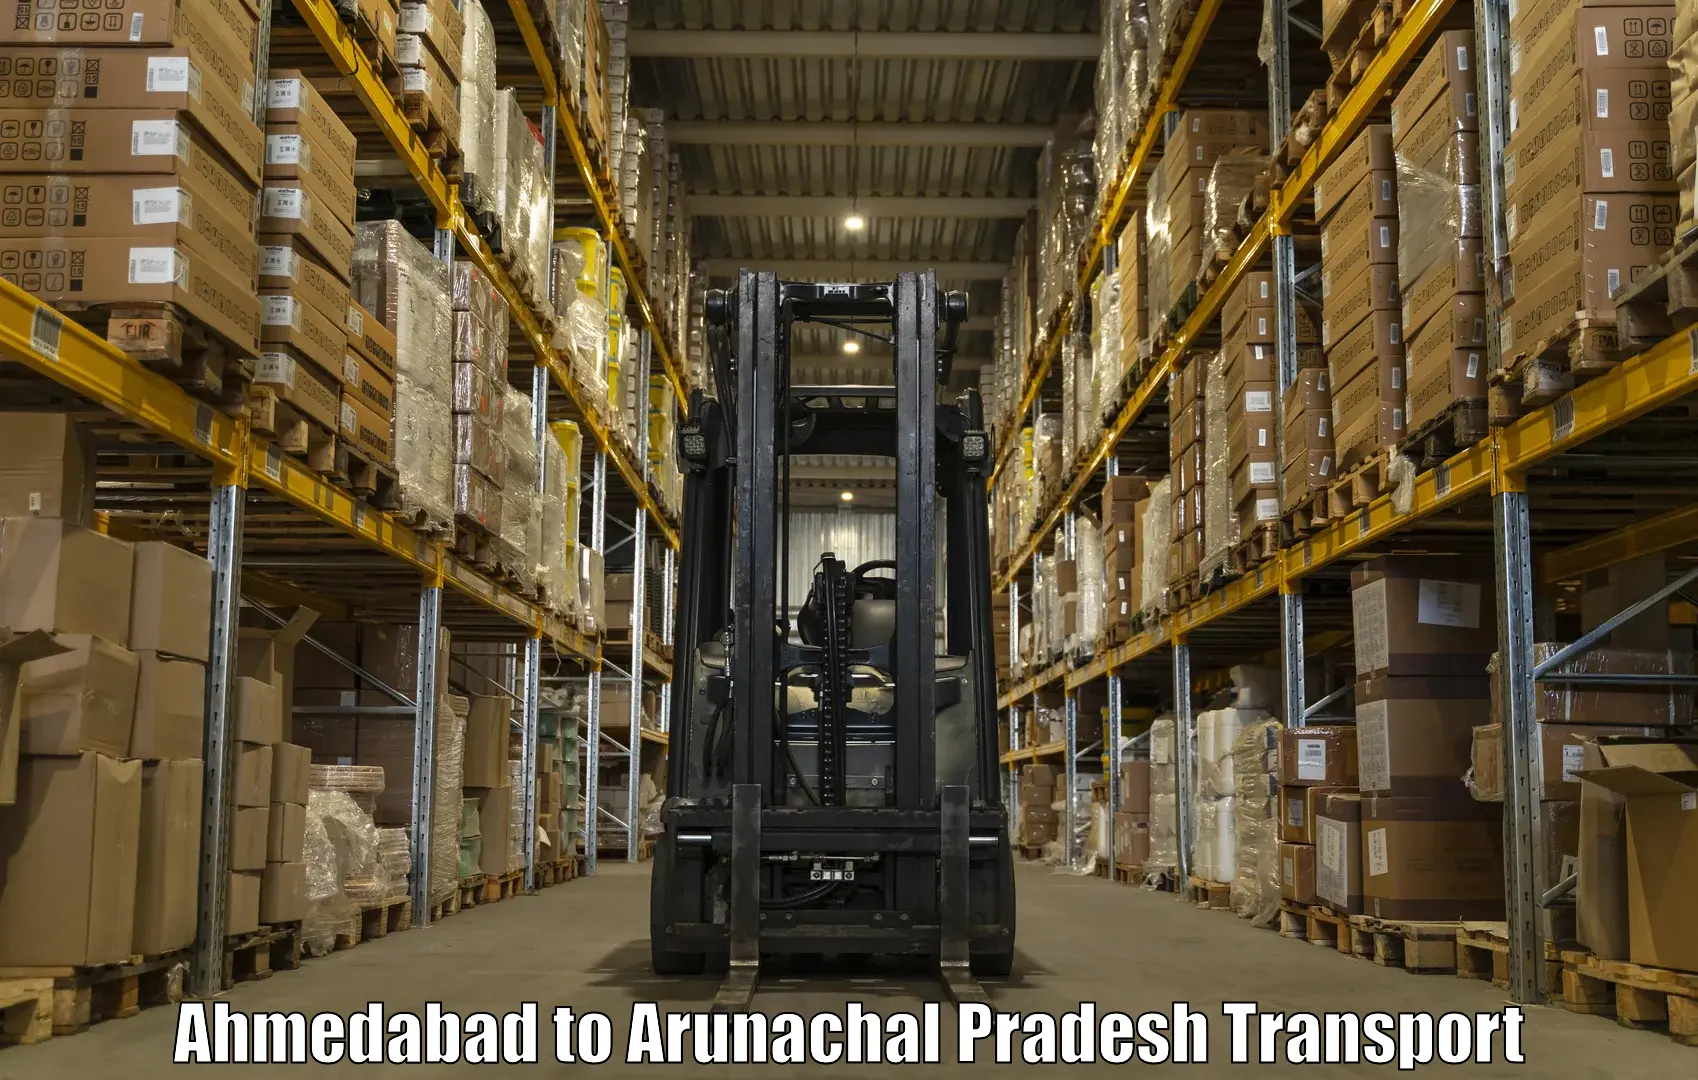 Shipping partner Ahmedabad to Lower Dibang Valley